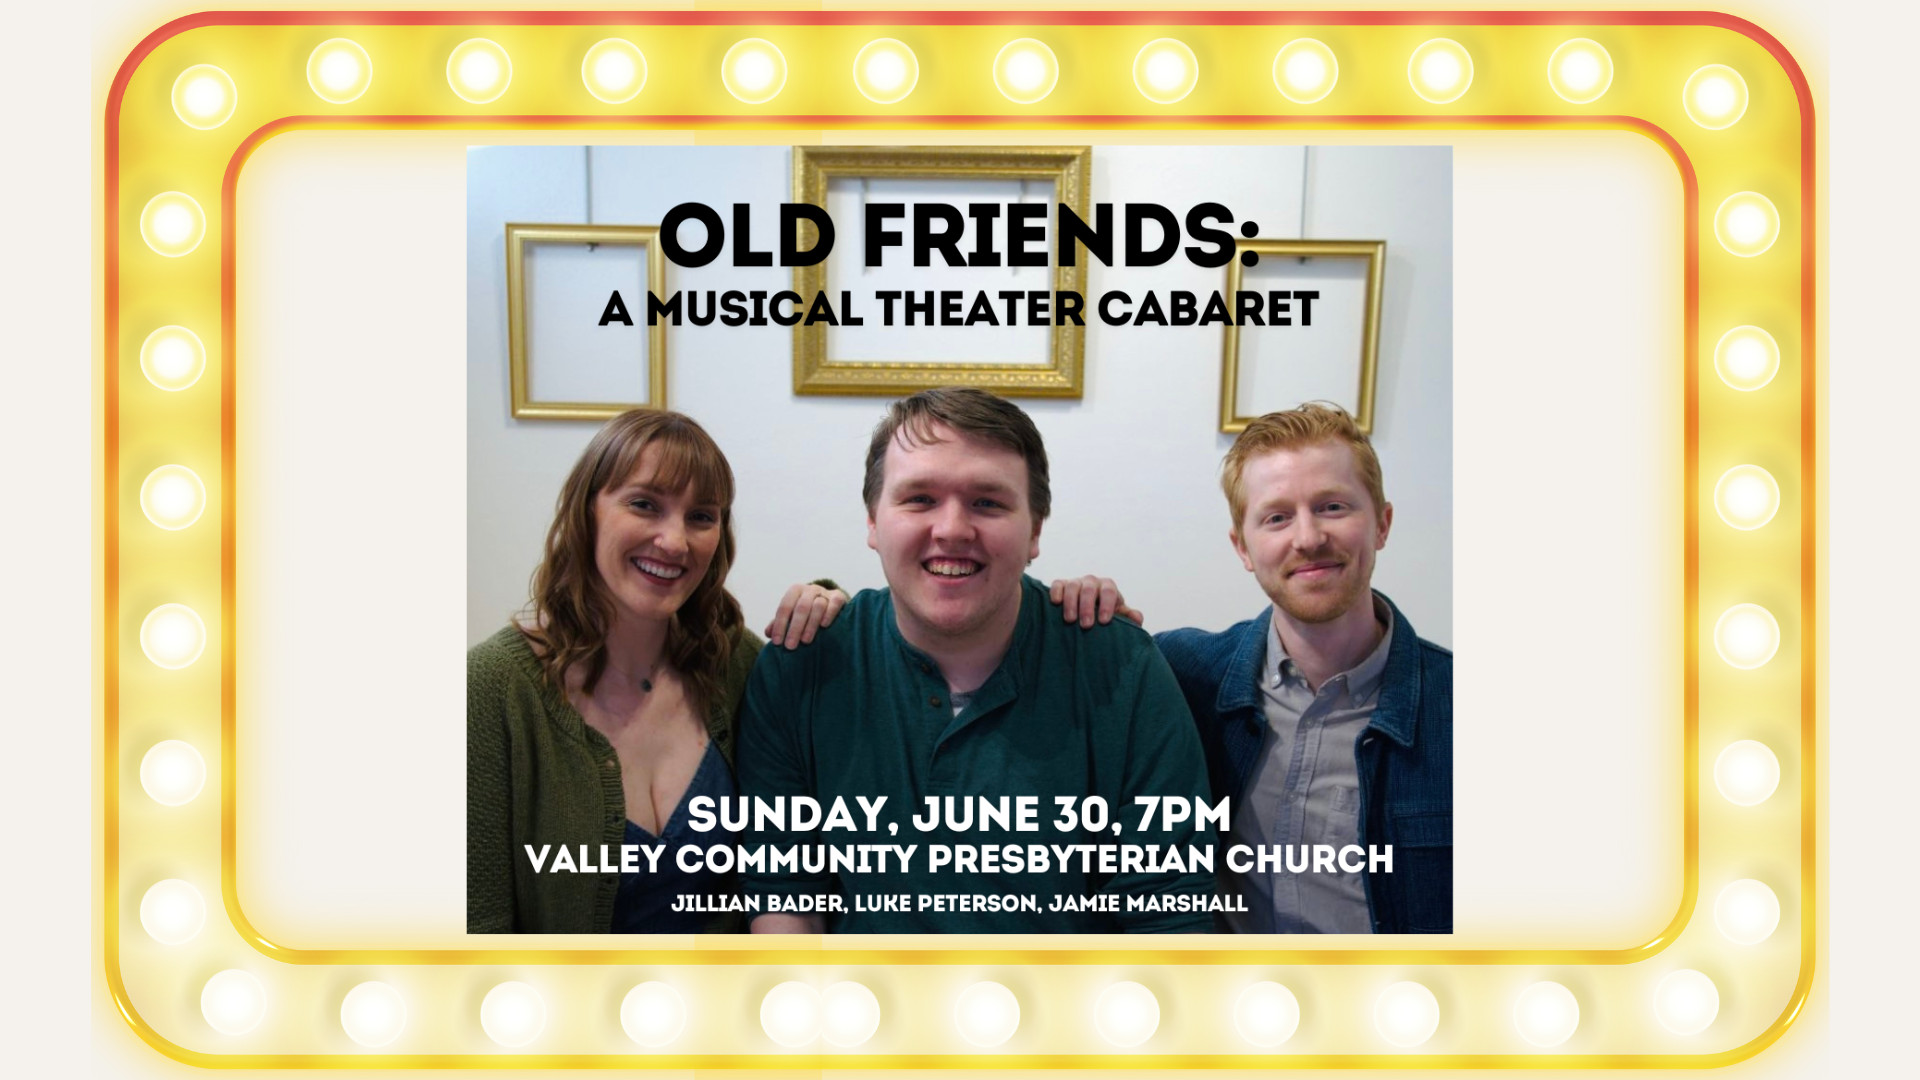 Old Friends: A Musical Theater Cabaret Fundraiser